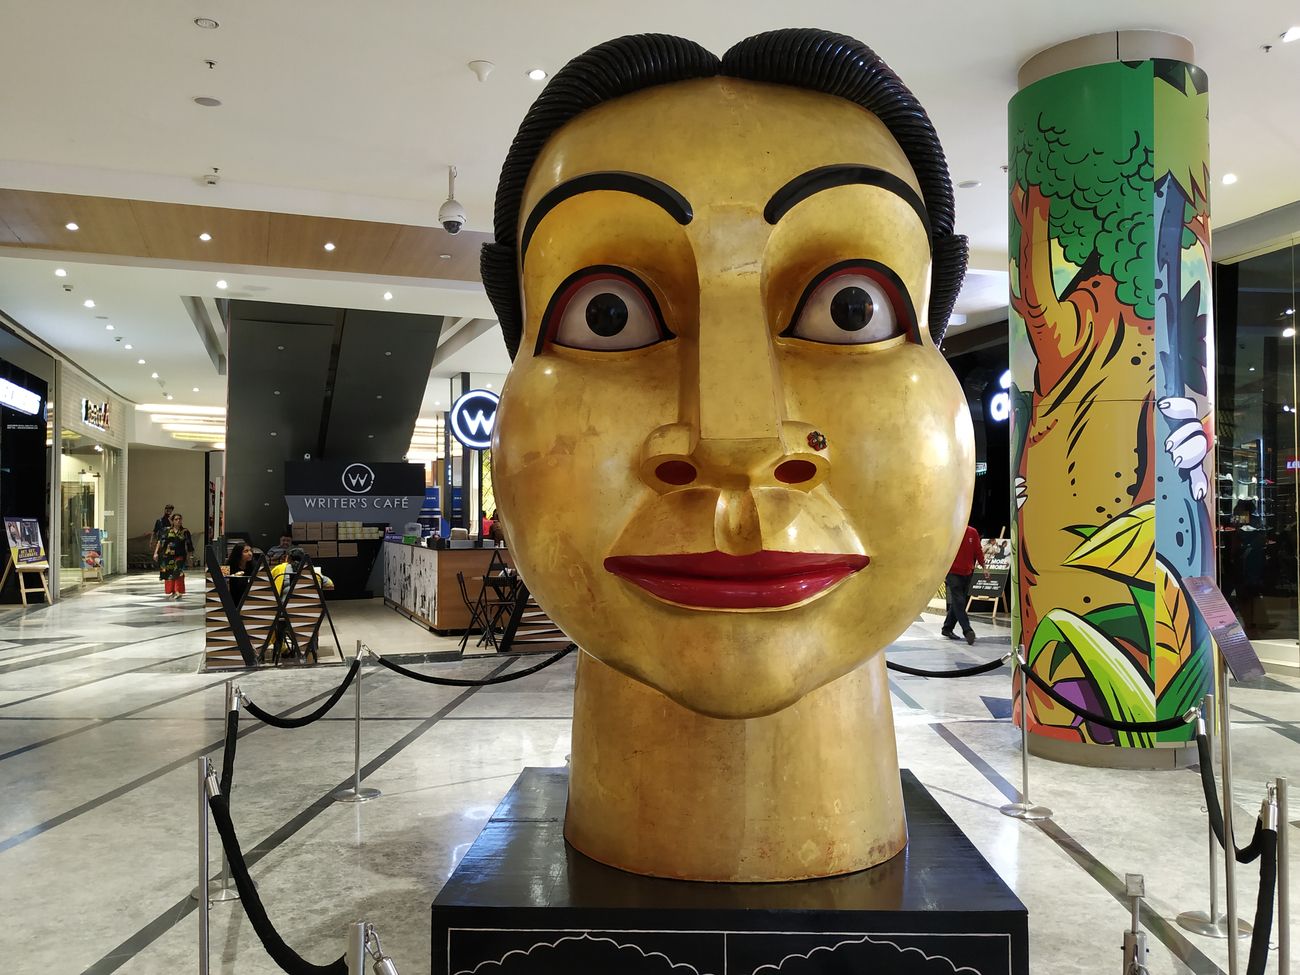 A striking head sculpture and decorative pillar form part of the nine art installations inside Phoenix Market City